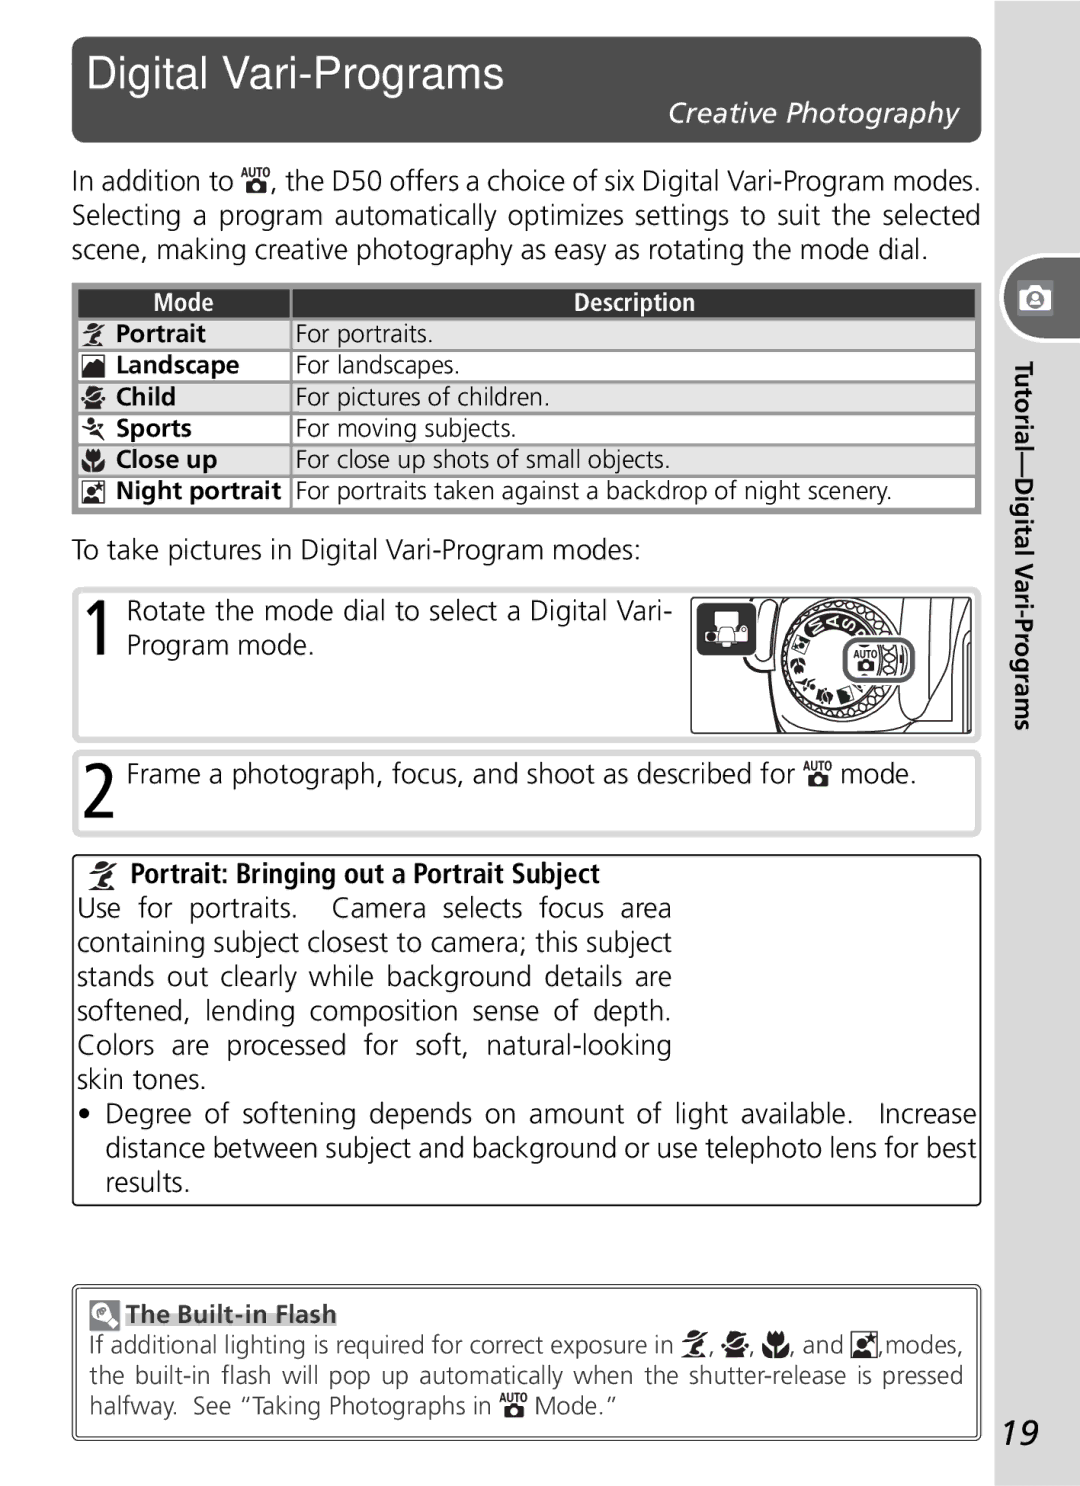 Nikon D50 manual Mode Description, Tutorial-Digital Vari-Programs 